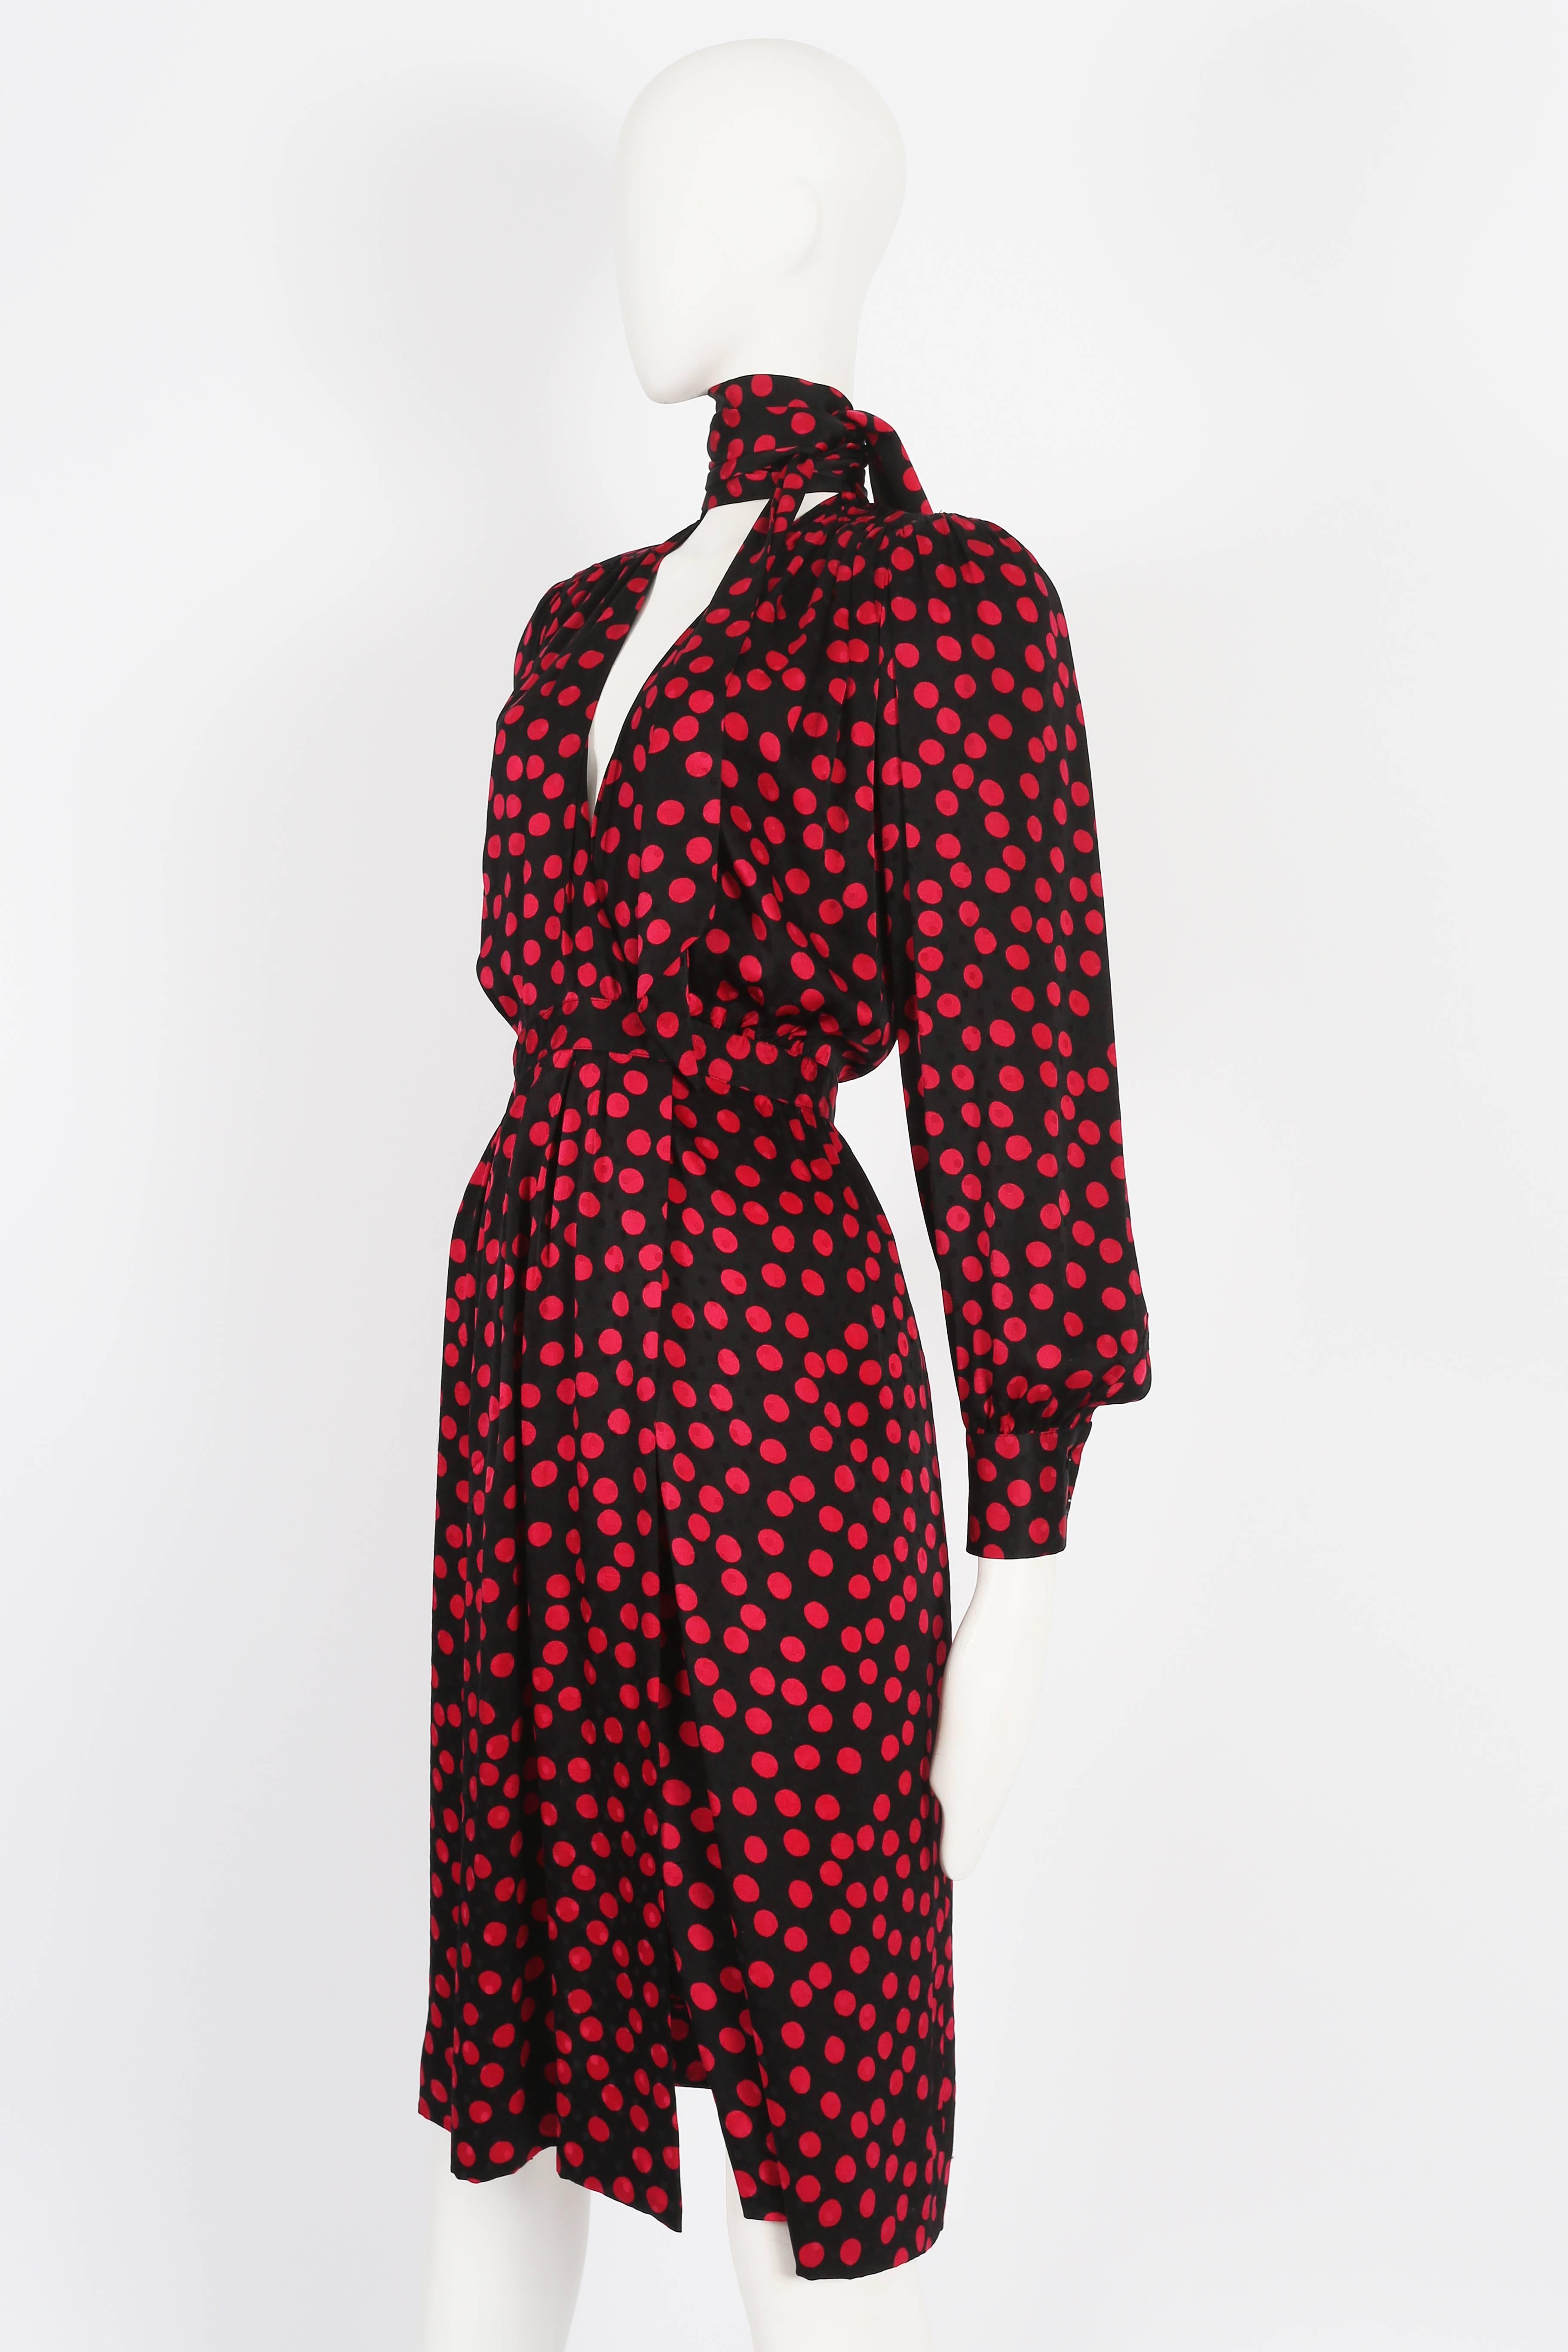 Women's Yves Saint Laurent silk polka dot evening wrap dress, circa 1970s